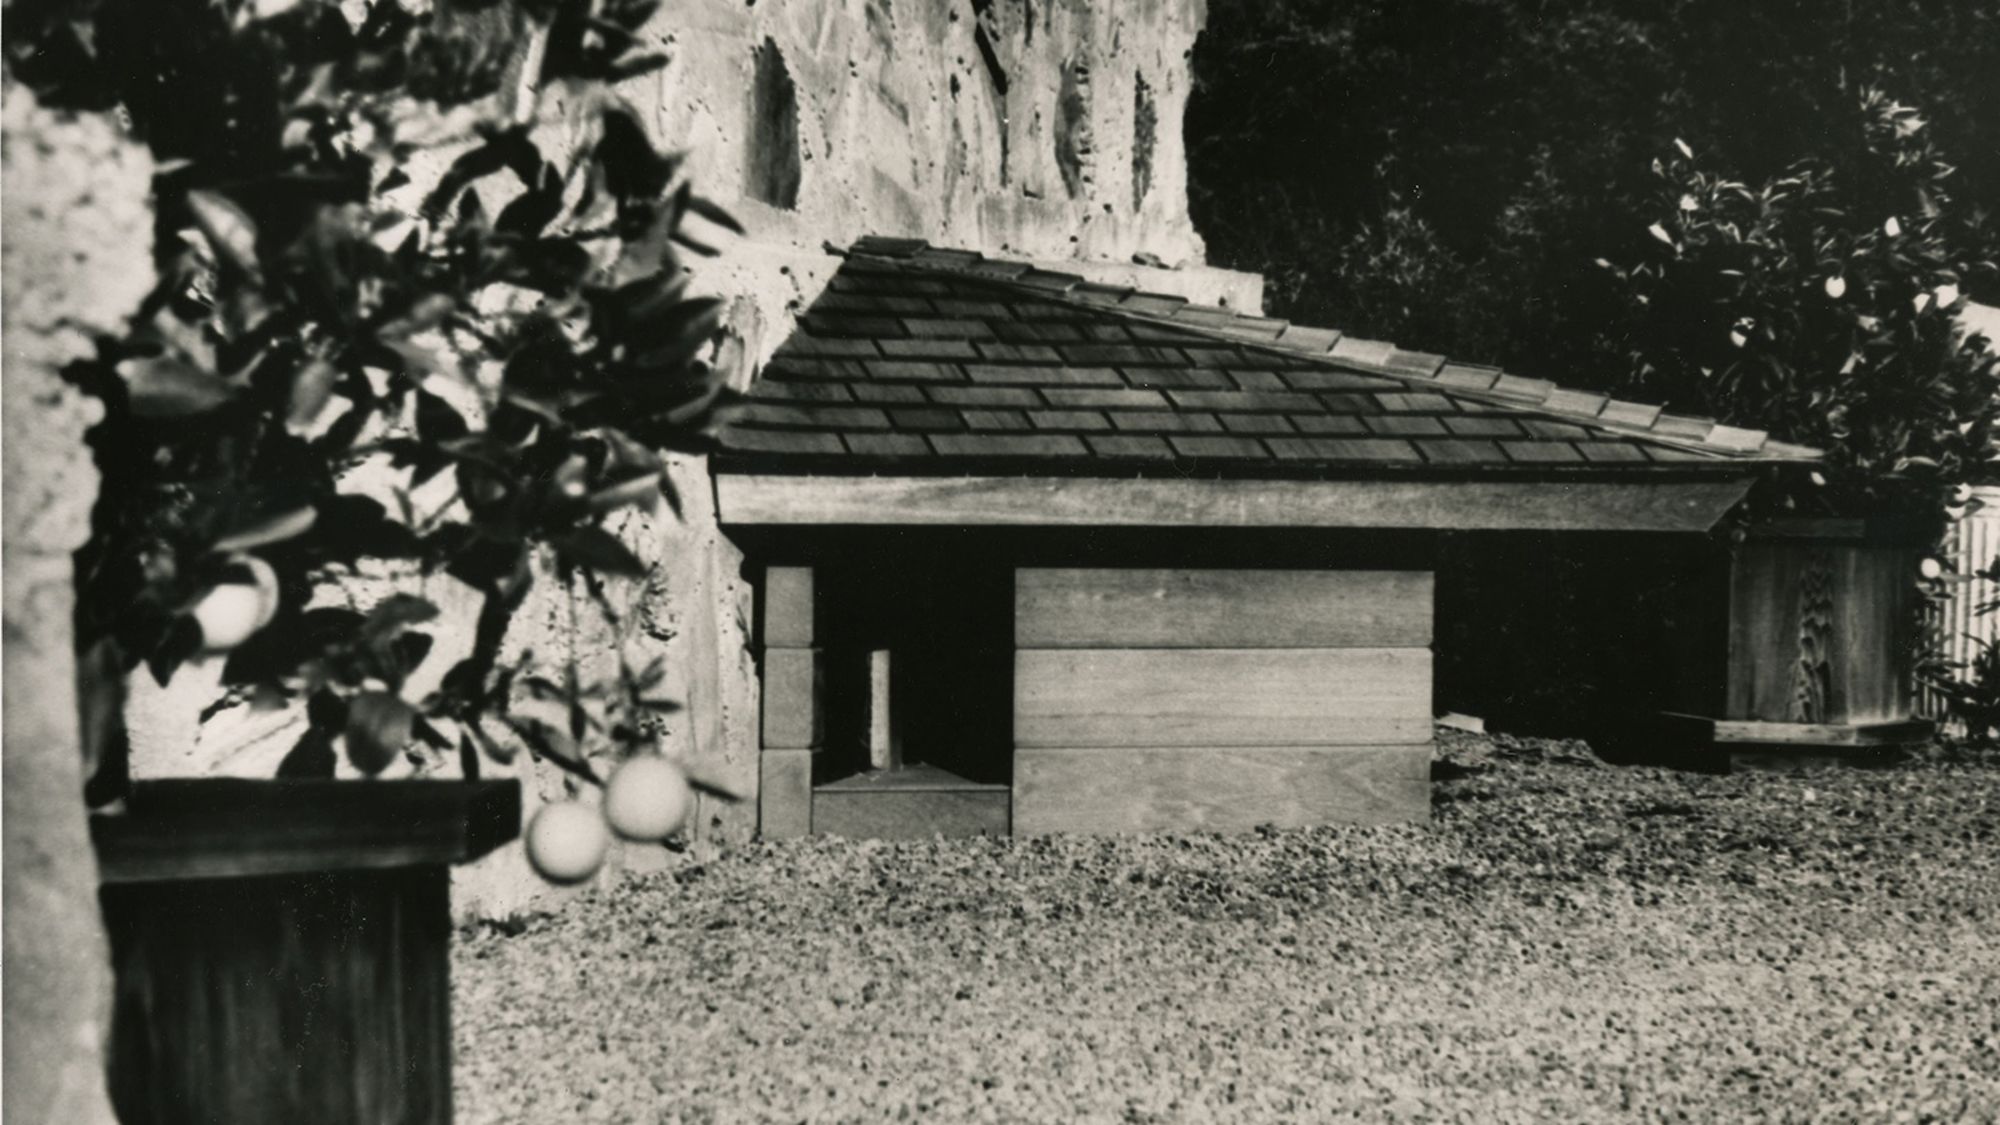 02 Frank Lloyd Wright dog house request HANDOUT